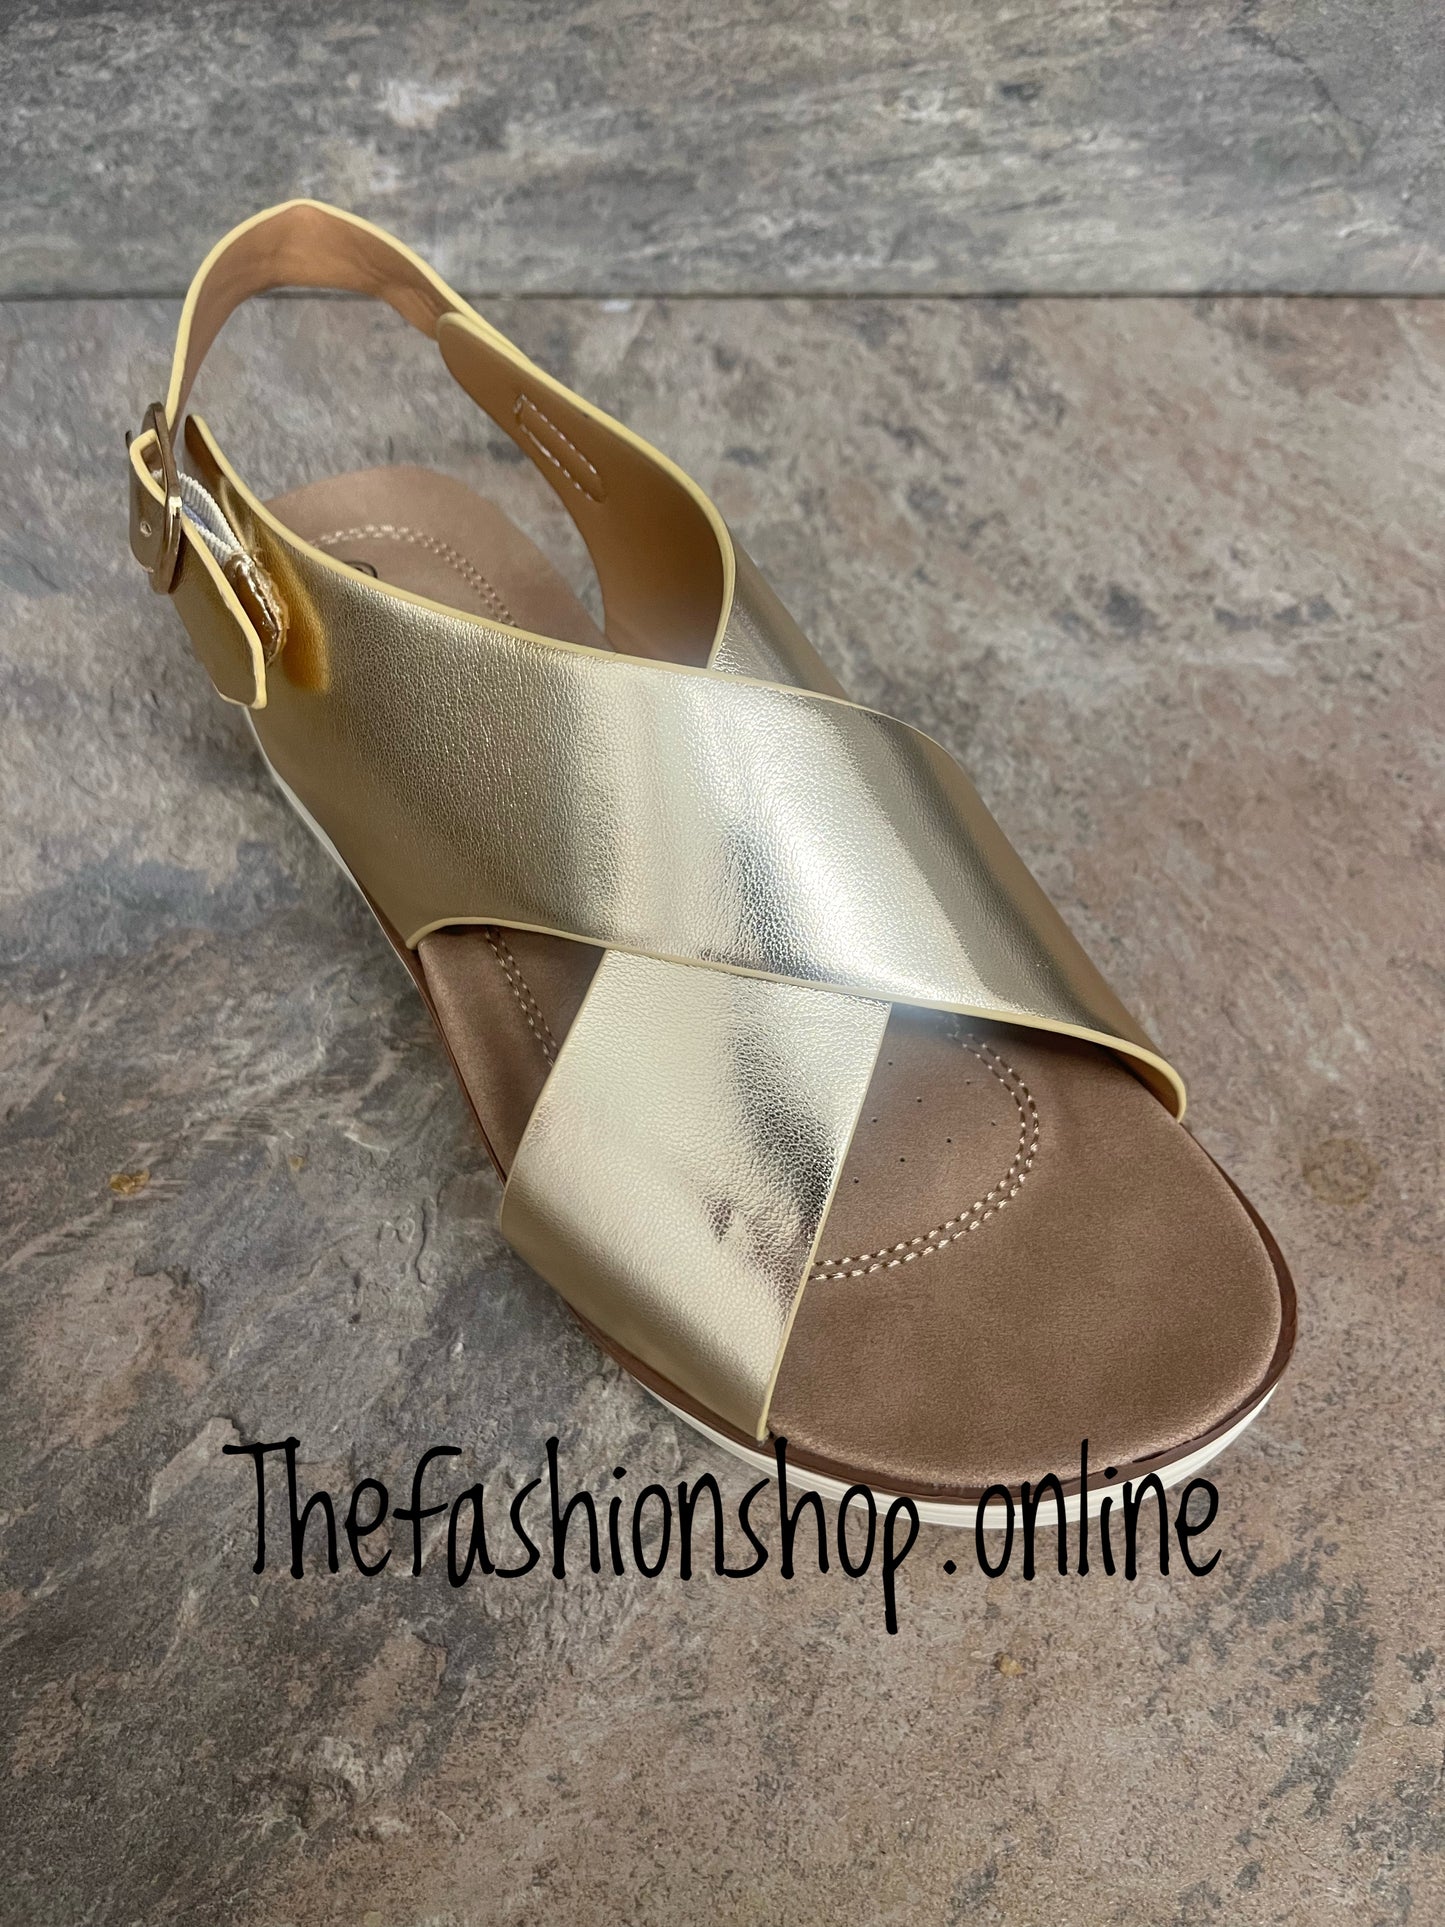 Gold criss cross sandals sizes 3.5-7